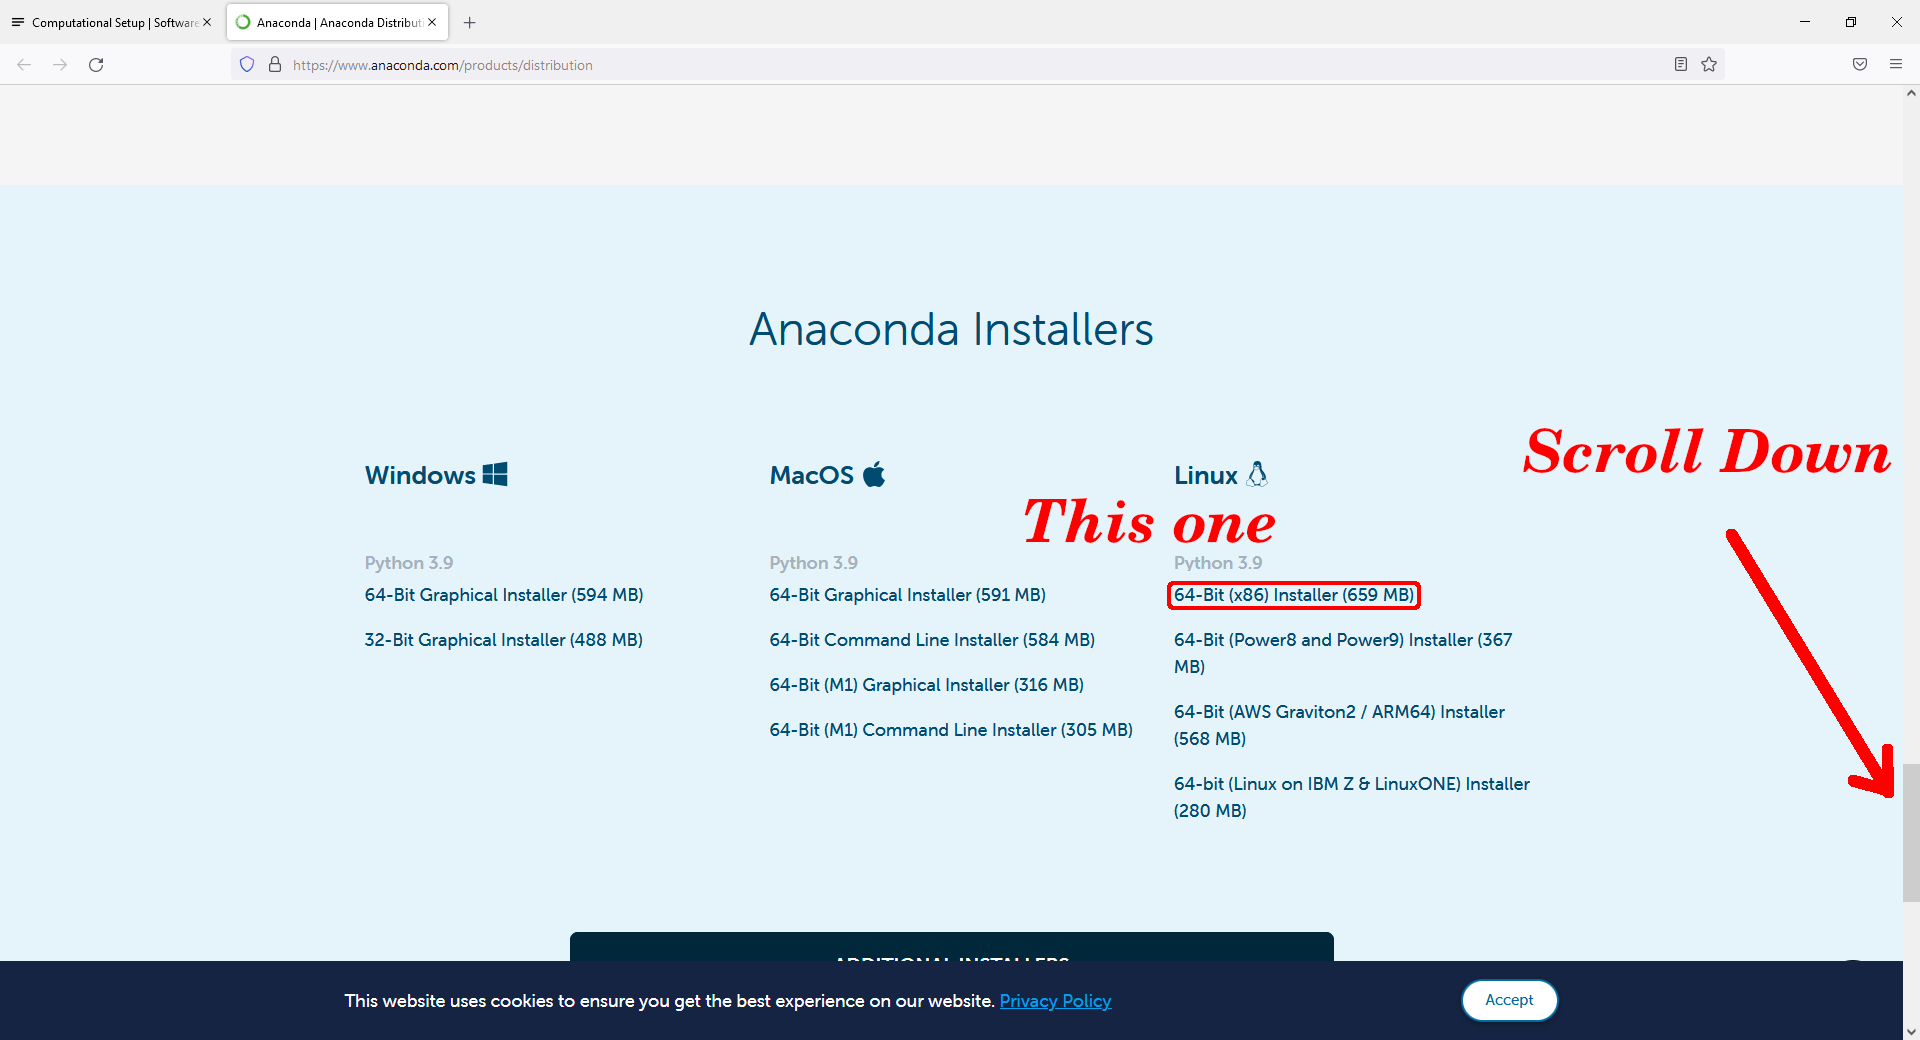 Screenshot of Anaconda downloads page with correct link
circled